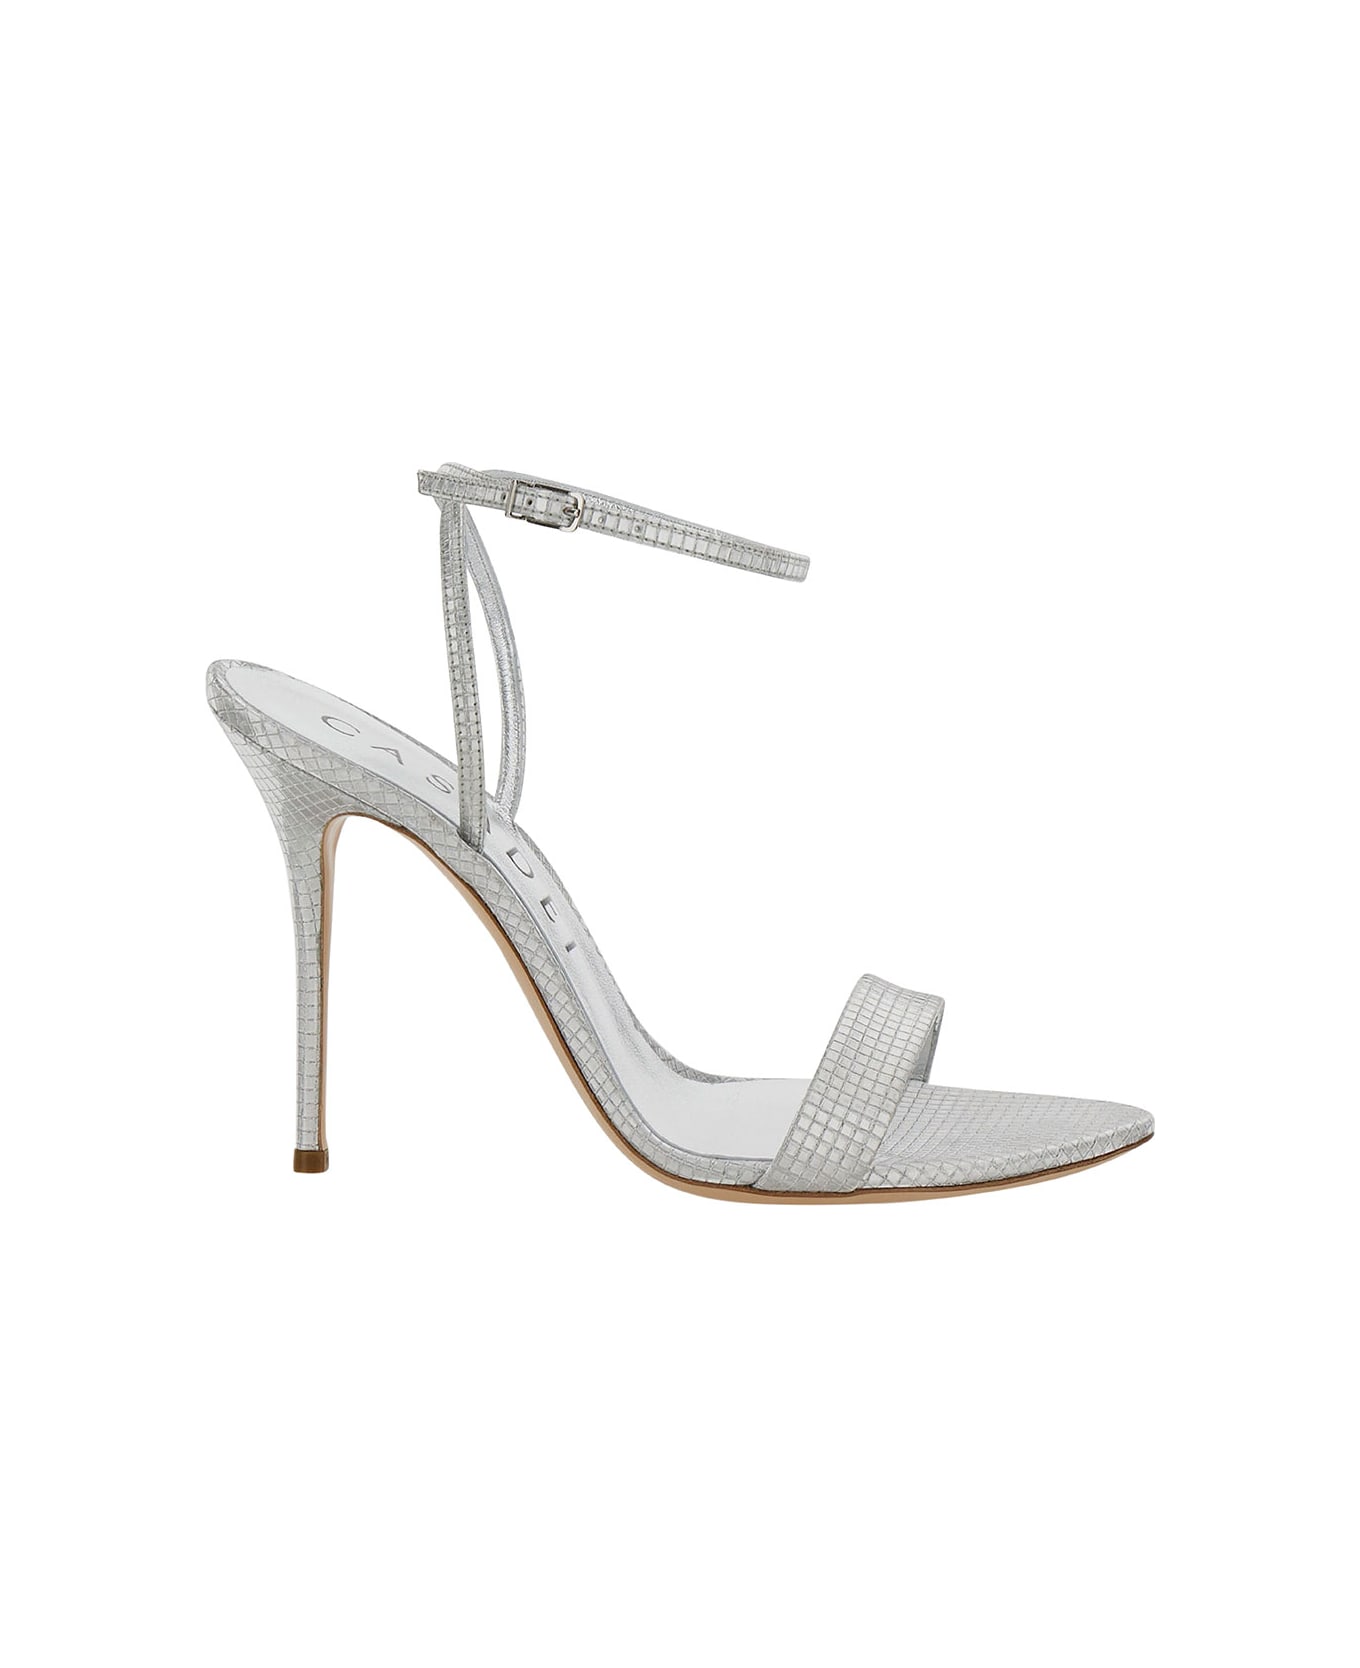 Casadei 'diadema' Silver Sandals With Blade Heel In Metallic Fabric Woman - Metallic